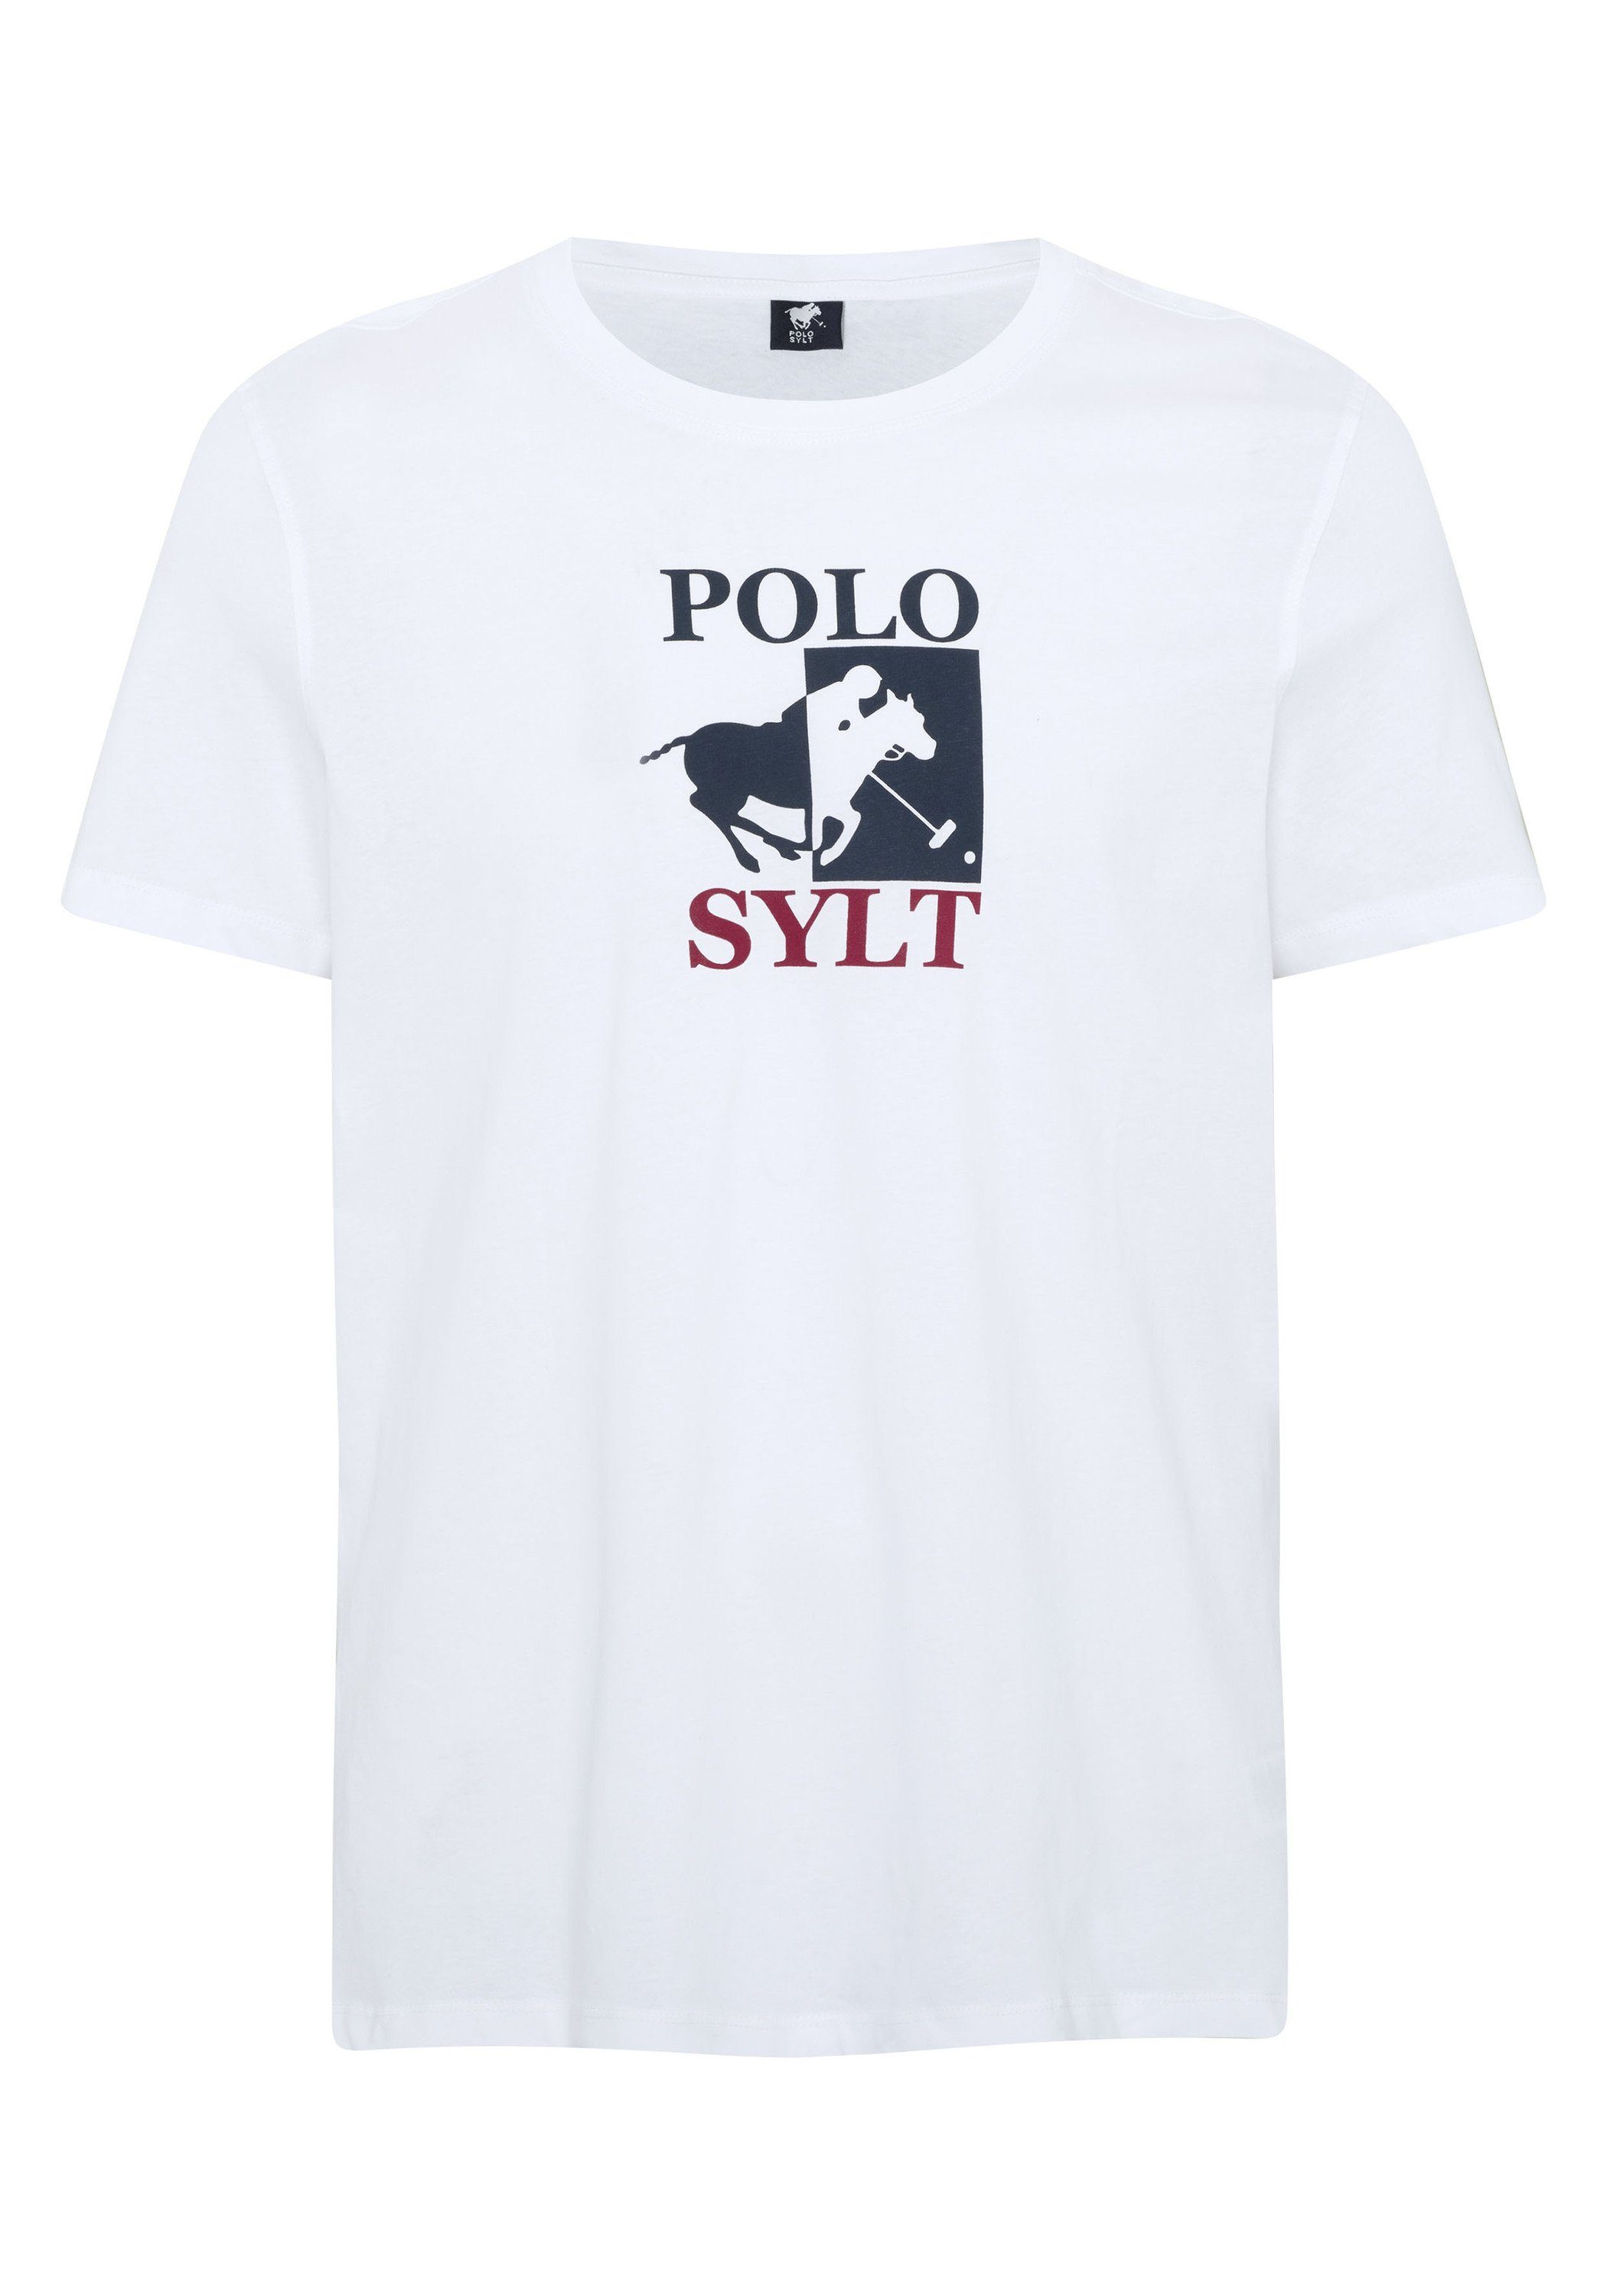 Polo Sylt Print-Shirt mit großem Logoprint 11-0601 Bright White